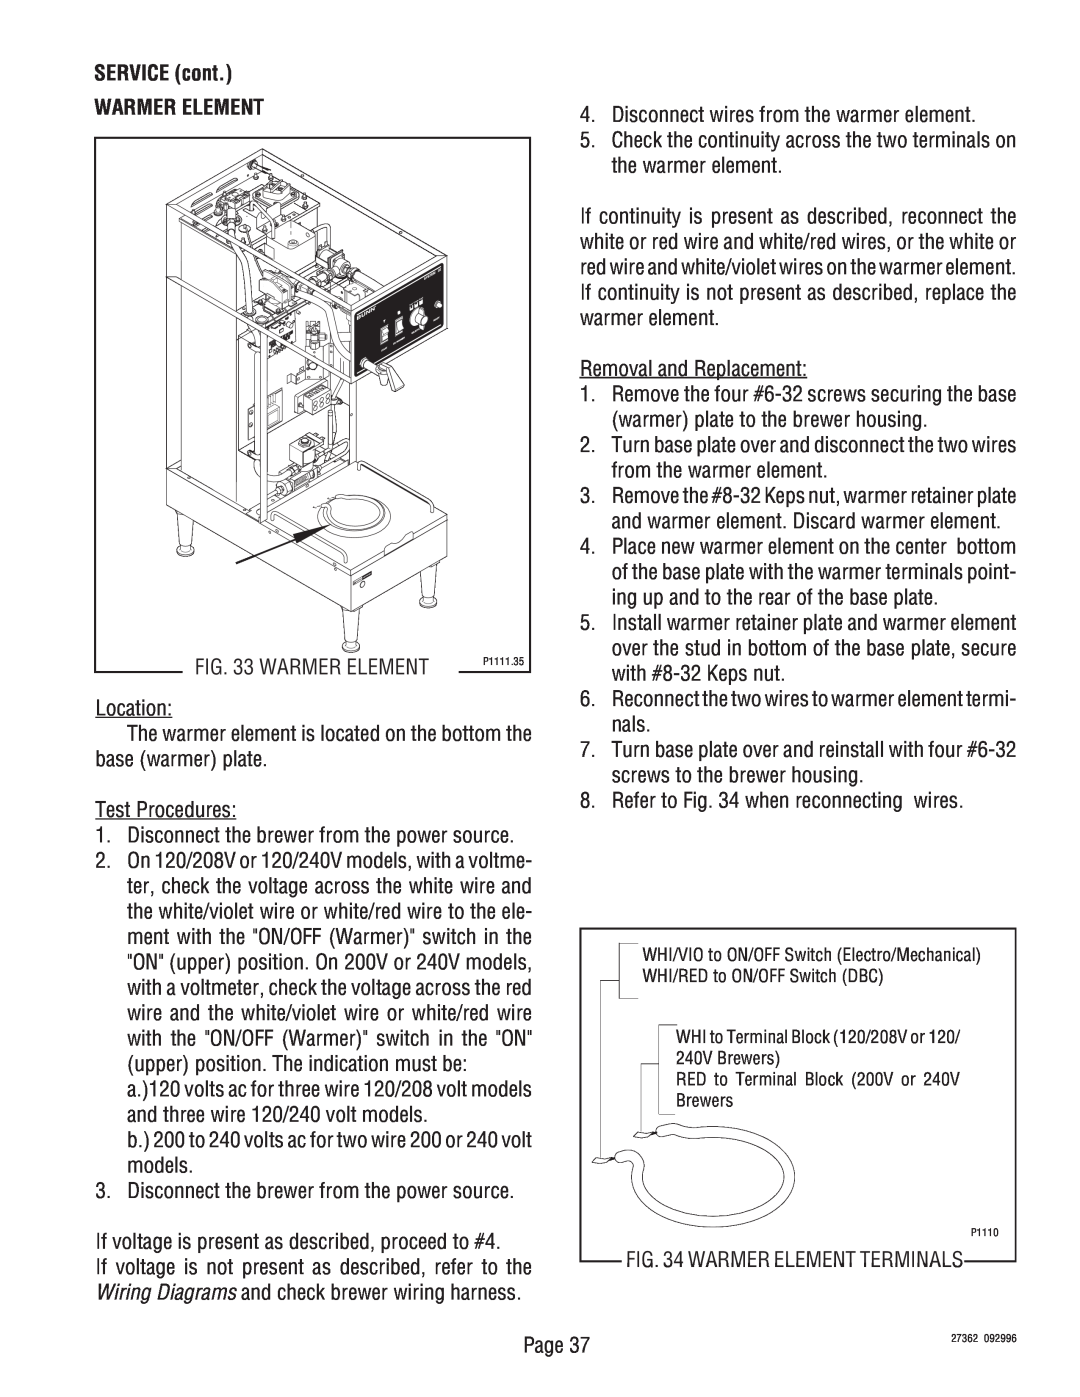 Bunn System III manual Warmer Element, SERVICE cont 